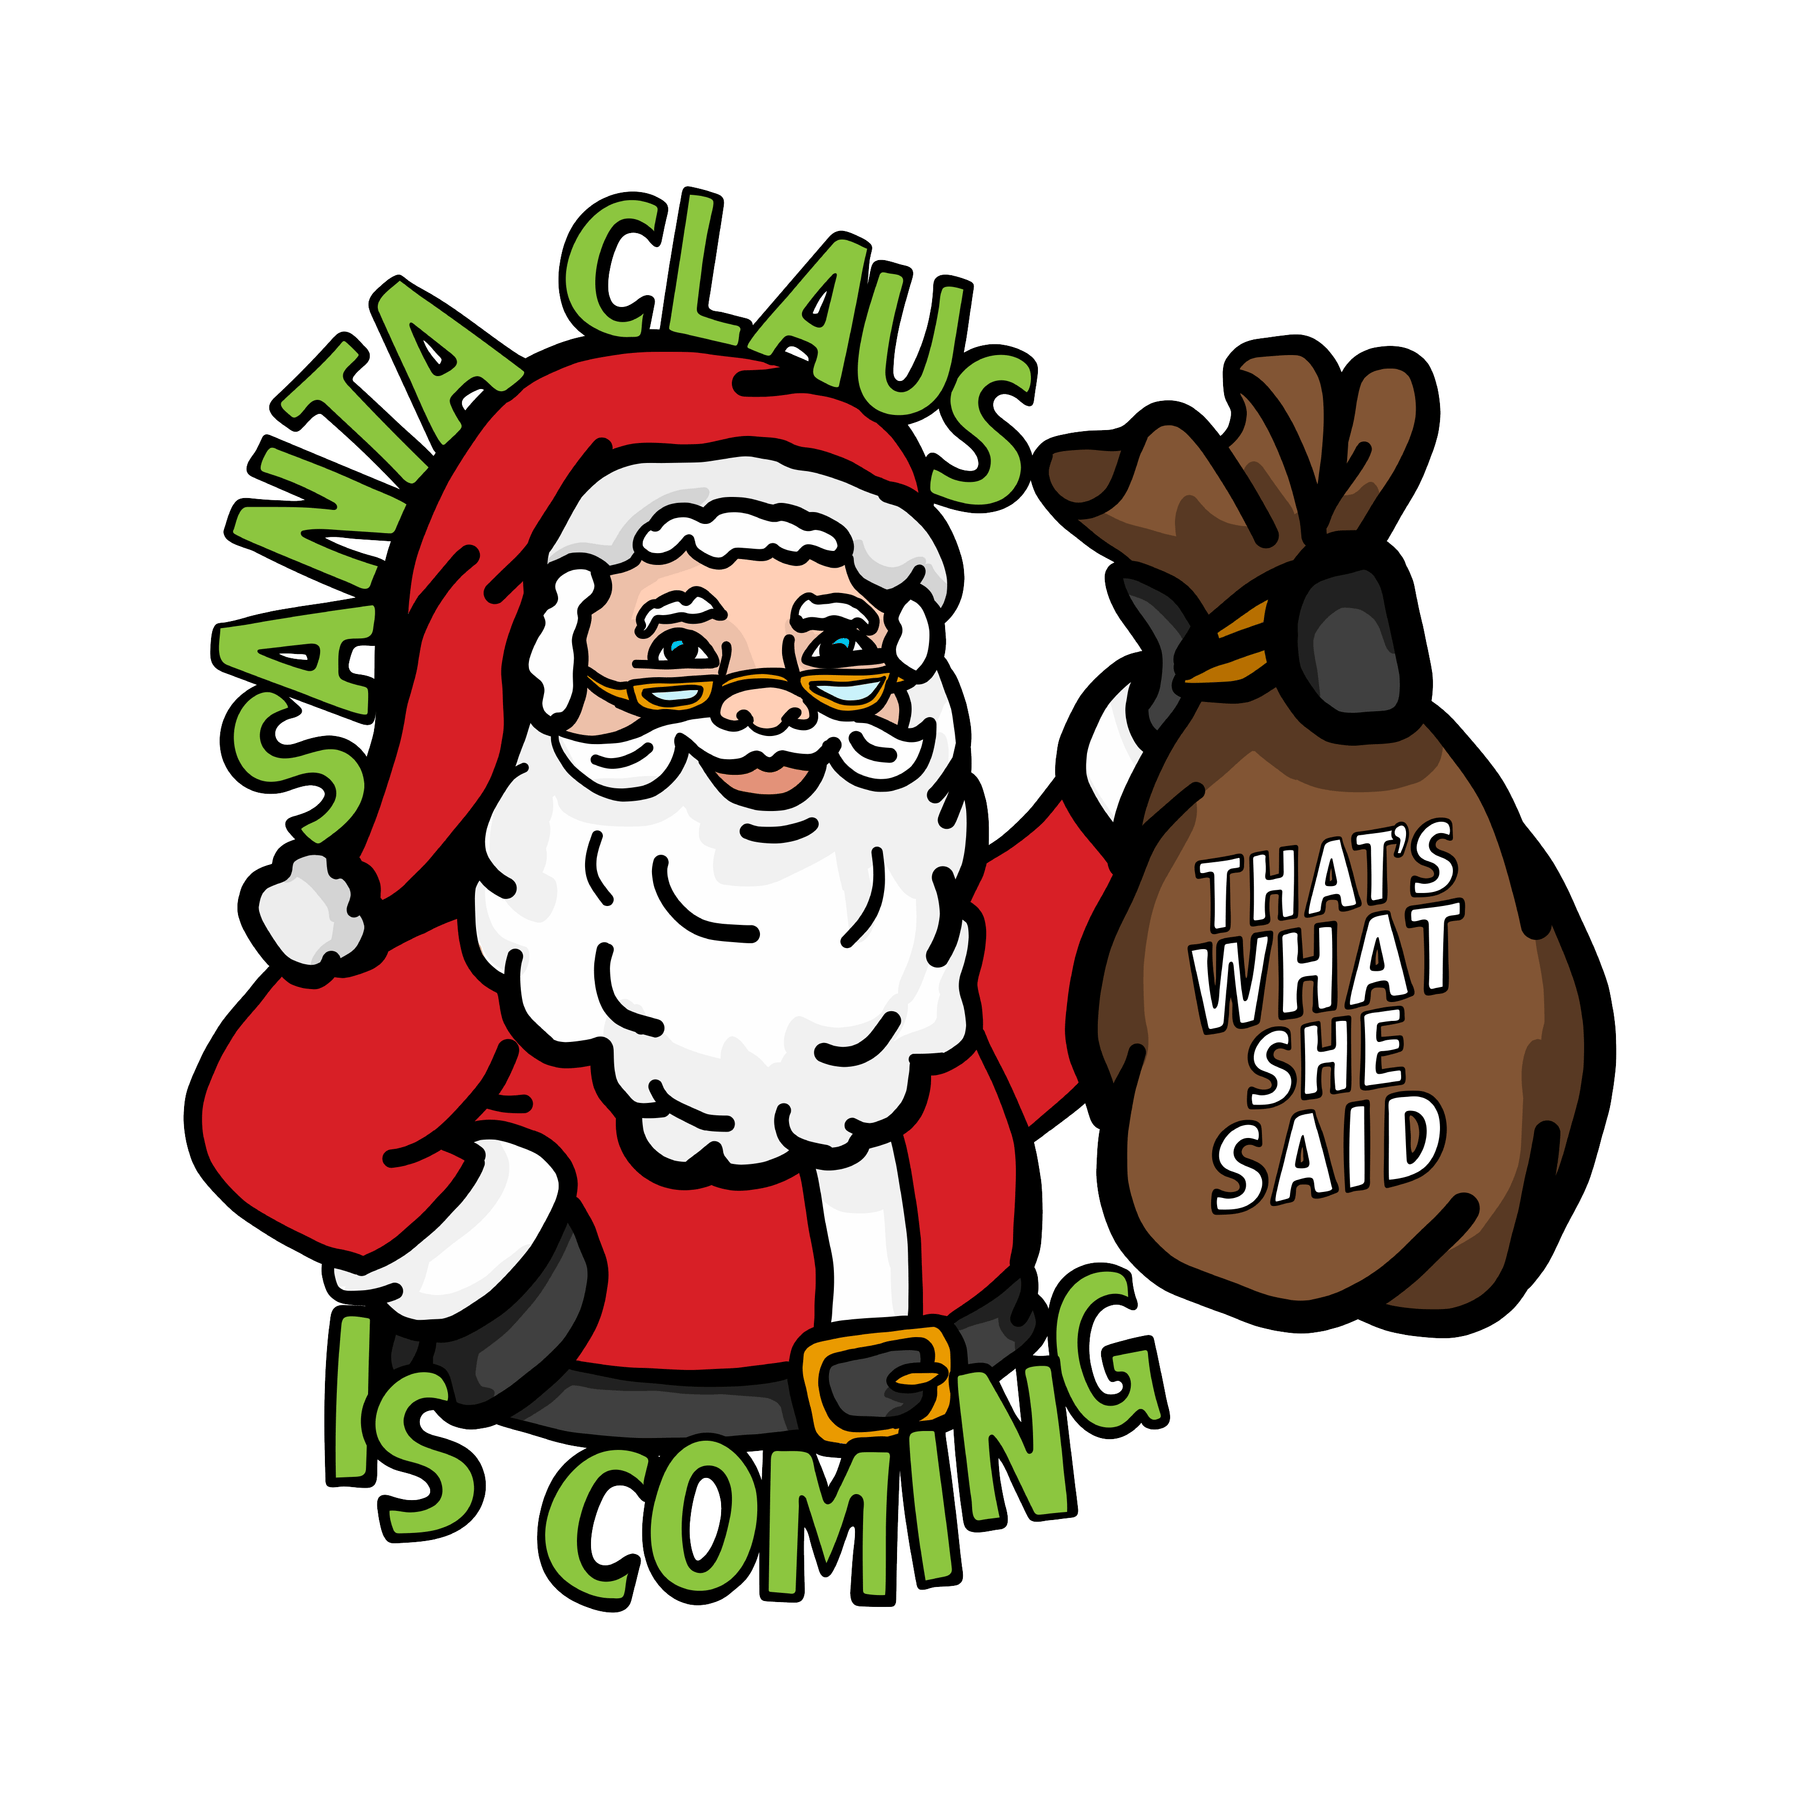 Santa is Coming 🎅🎄- Women's T Shirt